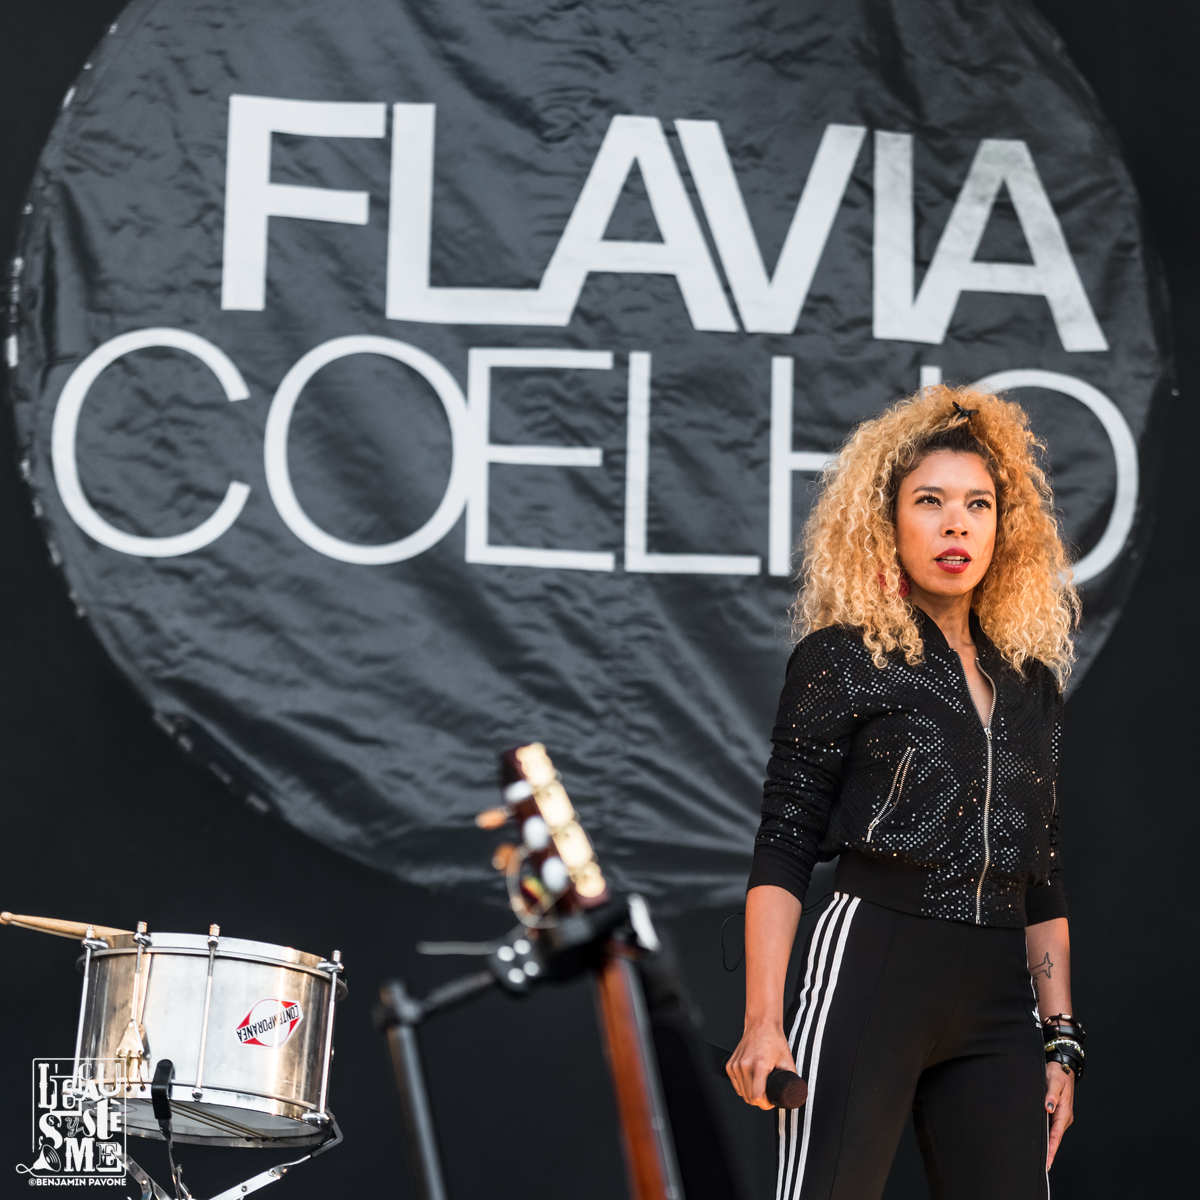 Festival Ecaussysteme 2019 flavia-coelho